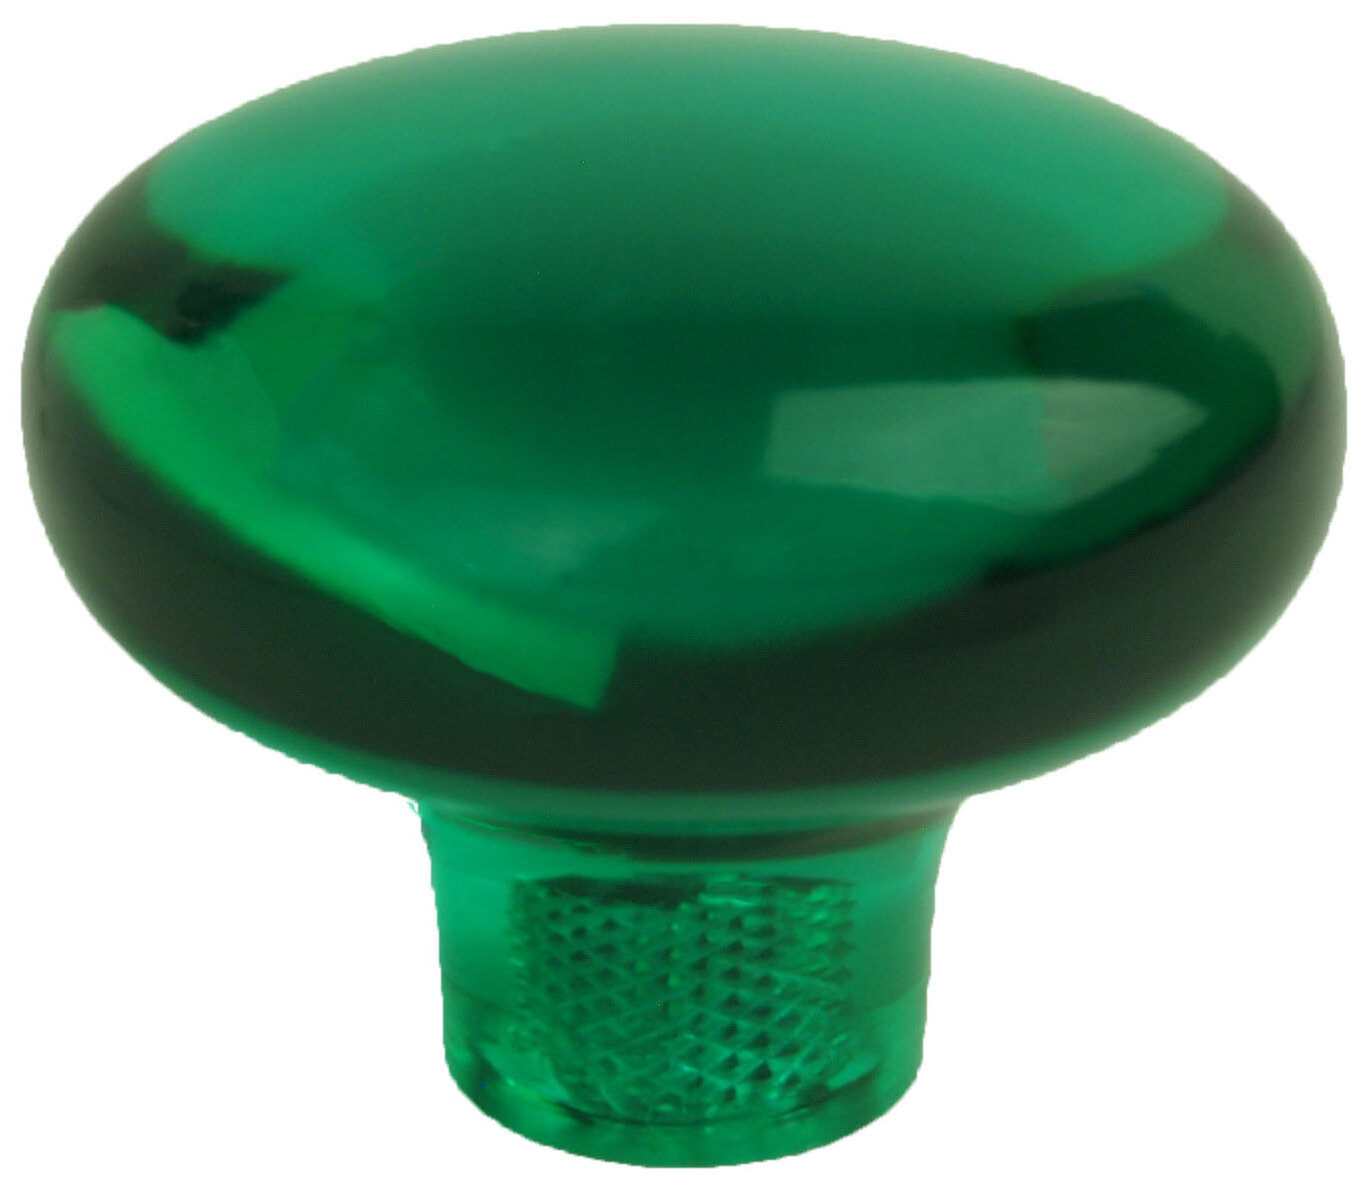 Lot 2 Emerald Green Glass Drawer Handles Pulls 3/" CTC w// hardware screws